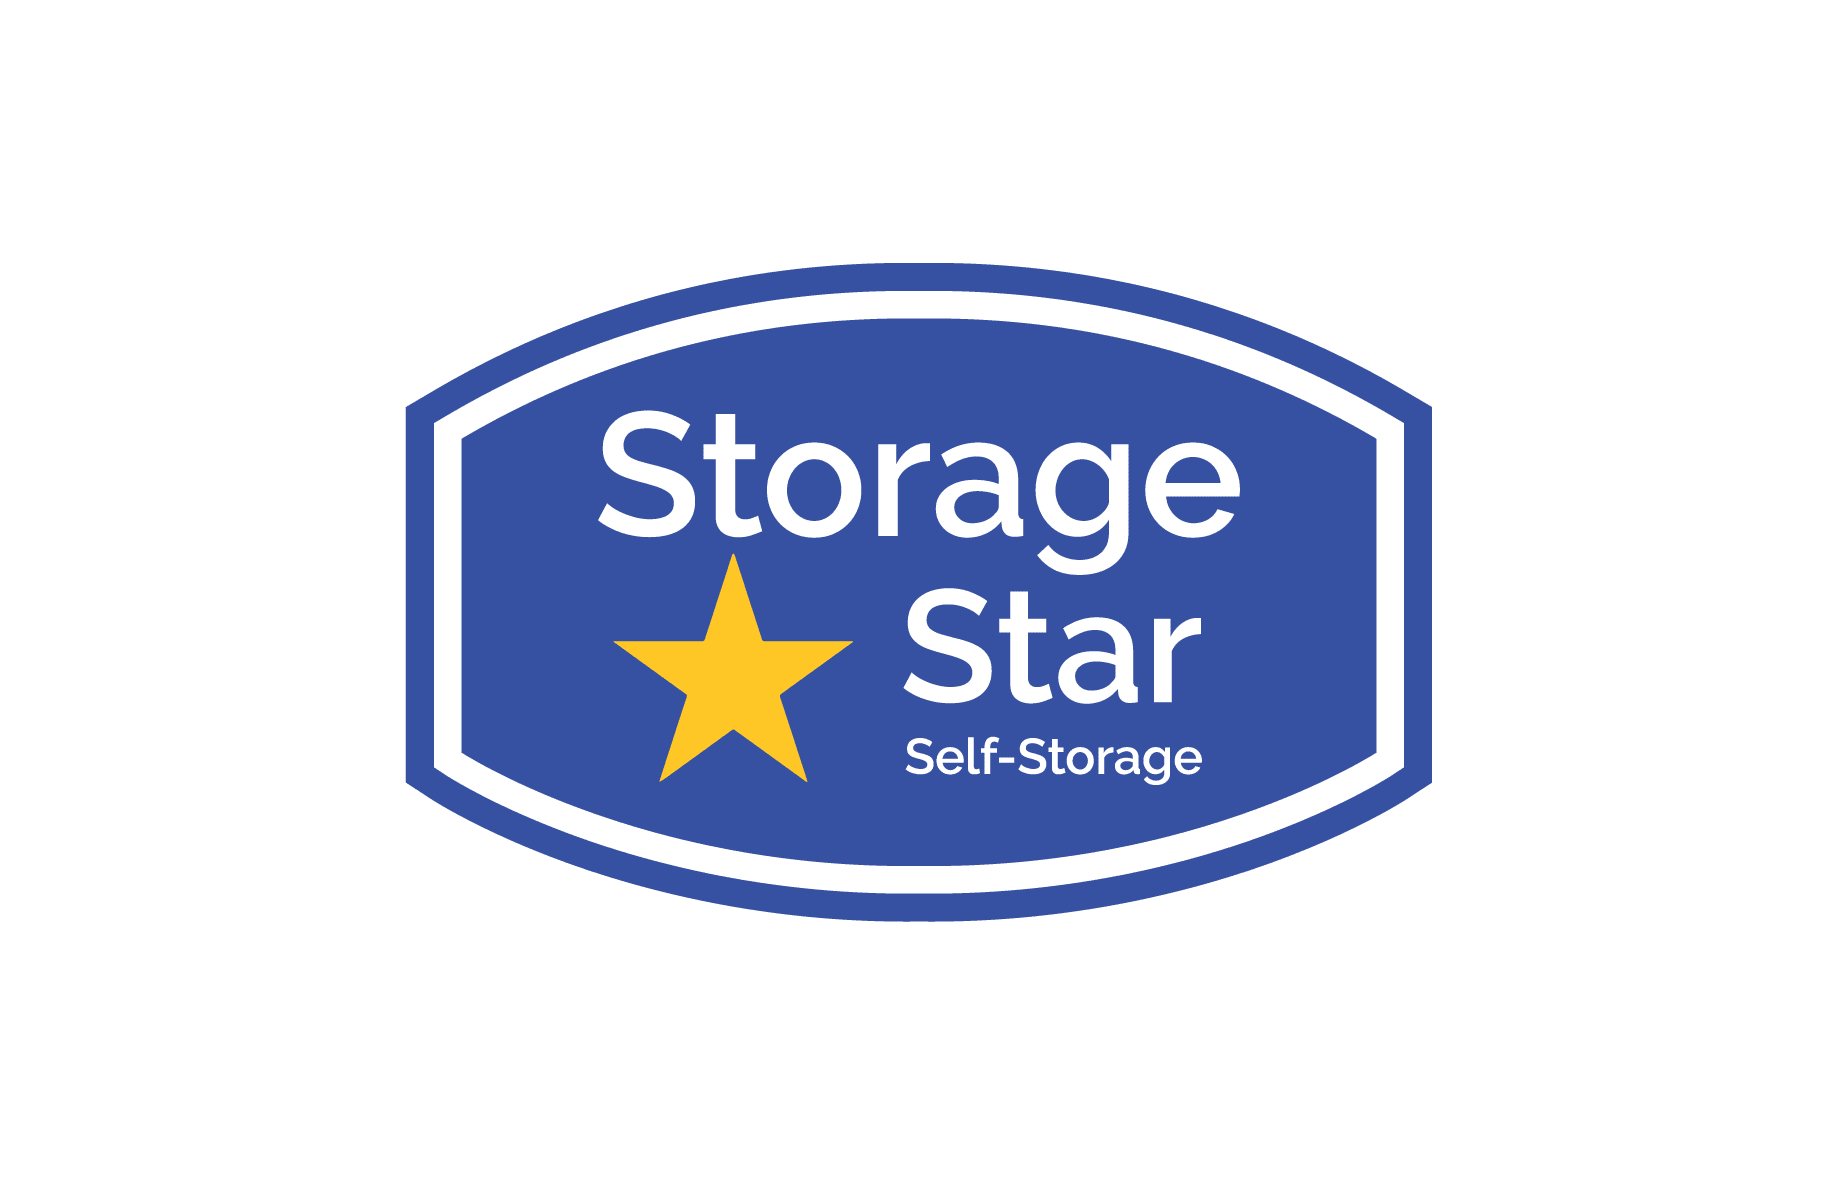 Storage Star - Anchorage South in Anchorage, Alaska logo